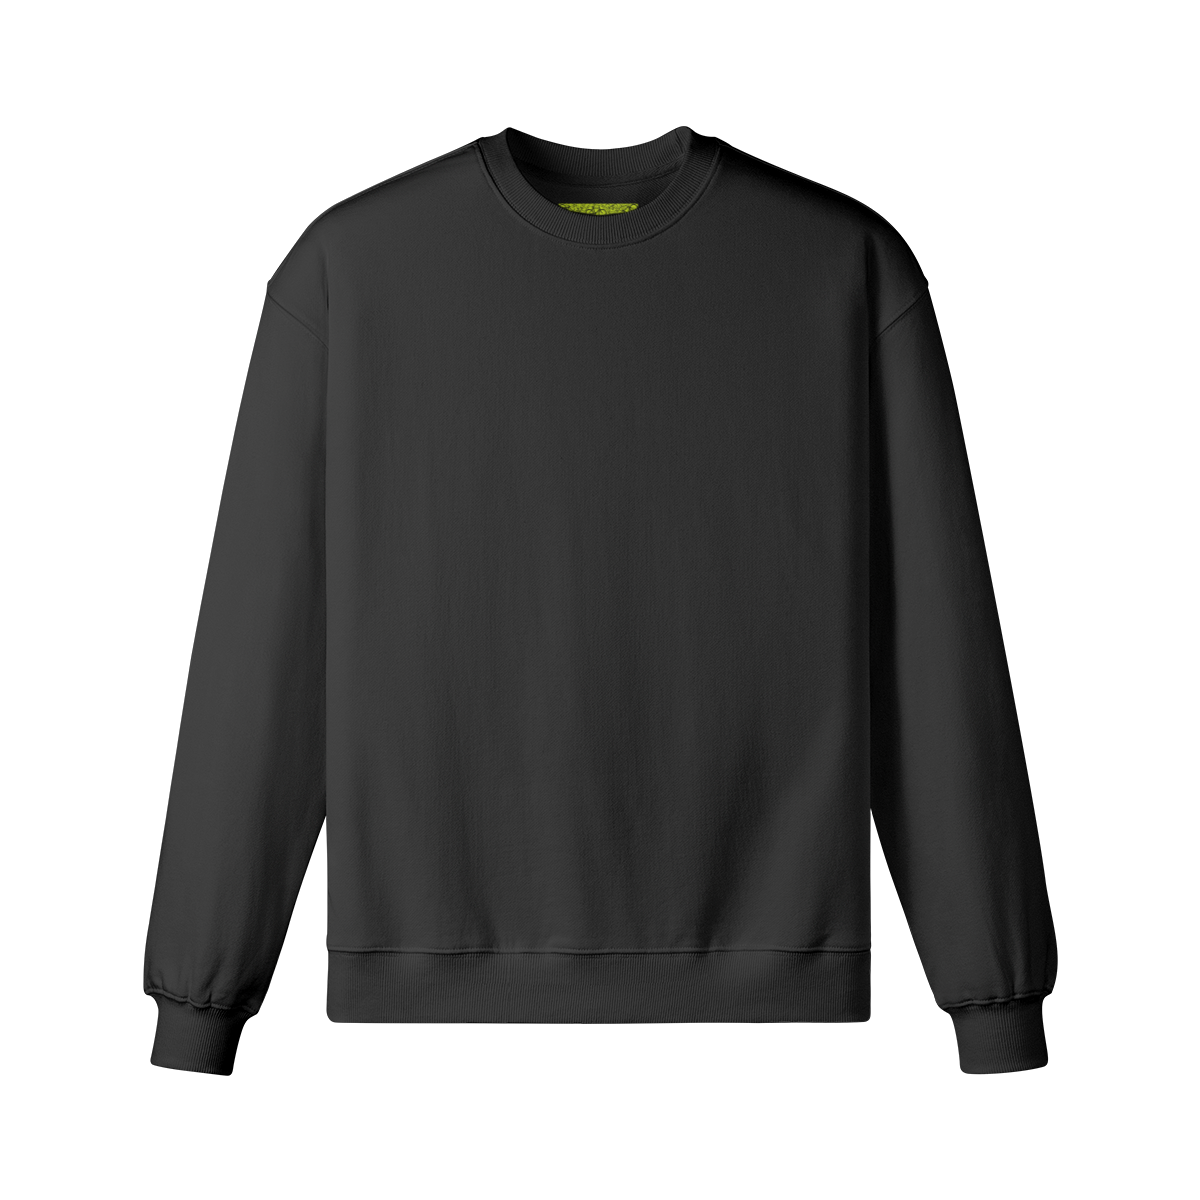 ALIEN INVASION (BACK PRINT) - Unisex Oversized Sweatshirt - black